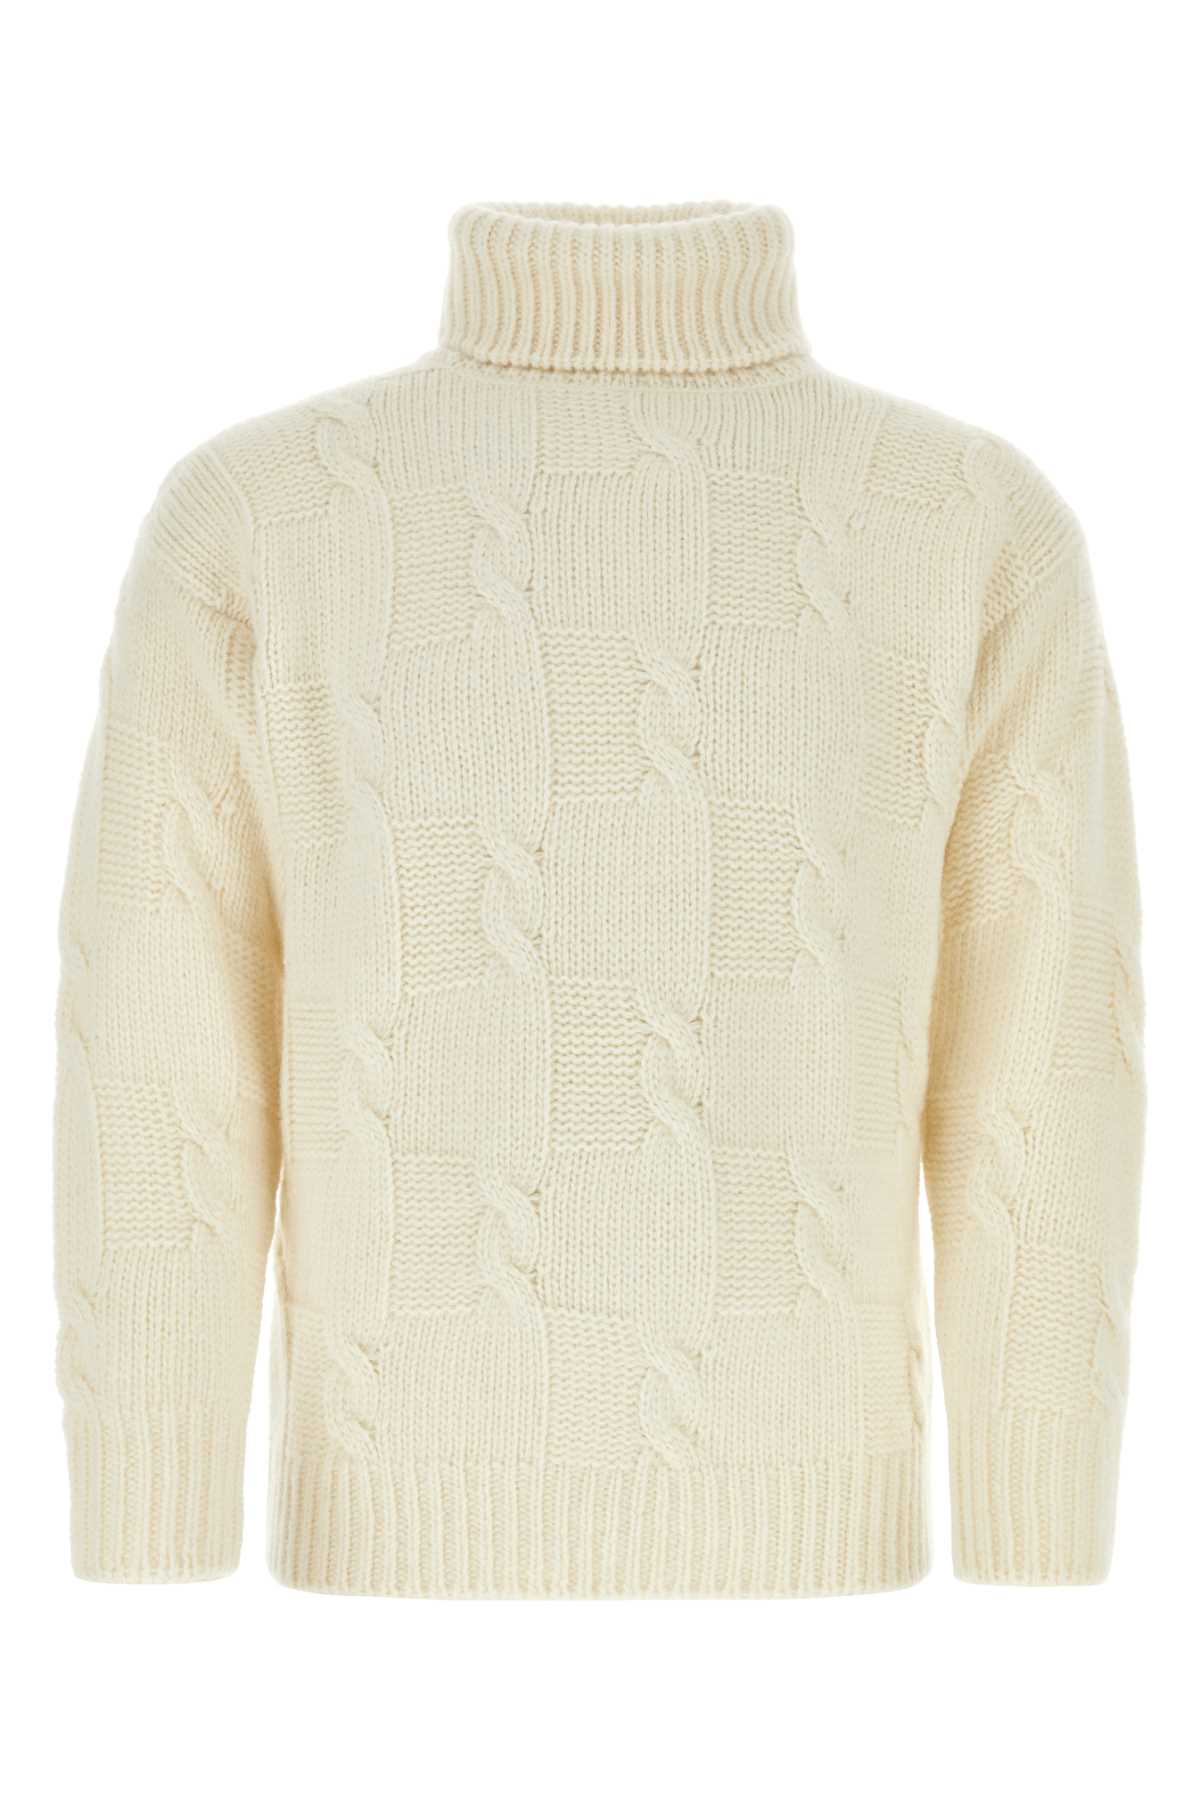 Ivory Wool Blend Sweater